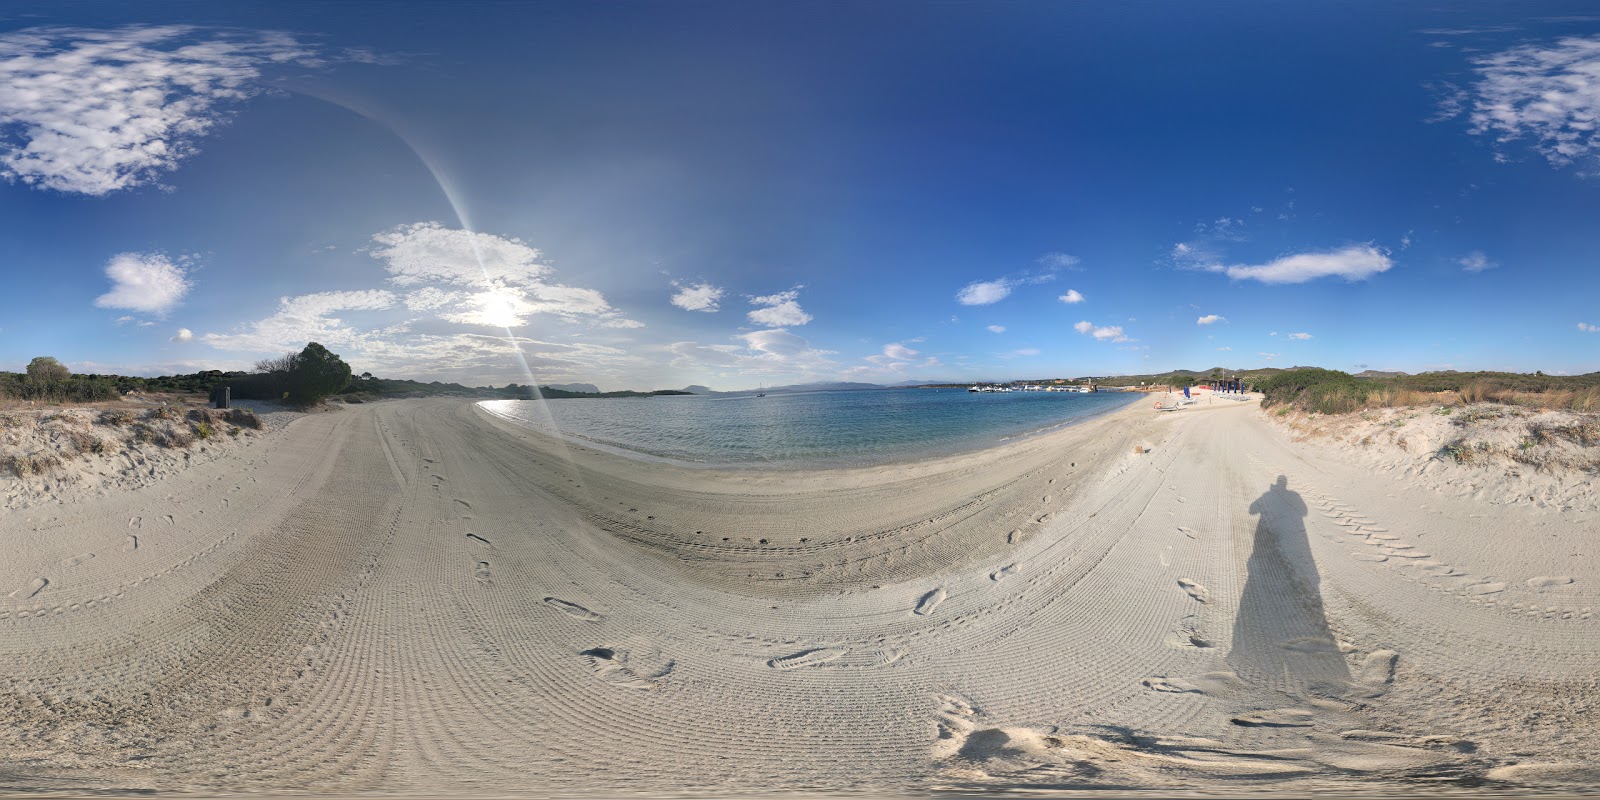 Foto de Spiaggia Nodu Piano com pequena baía